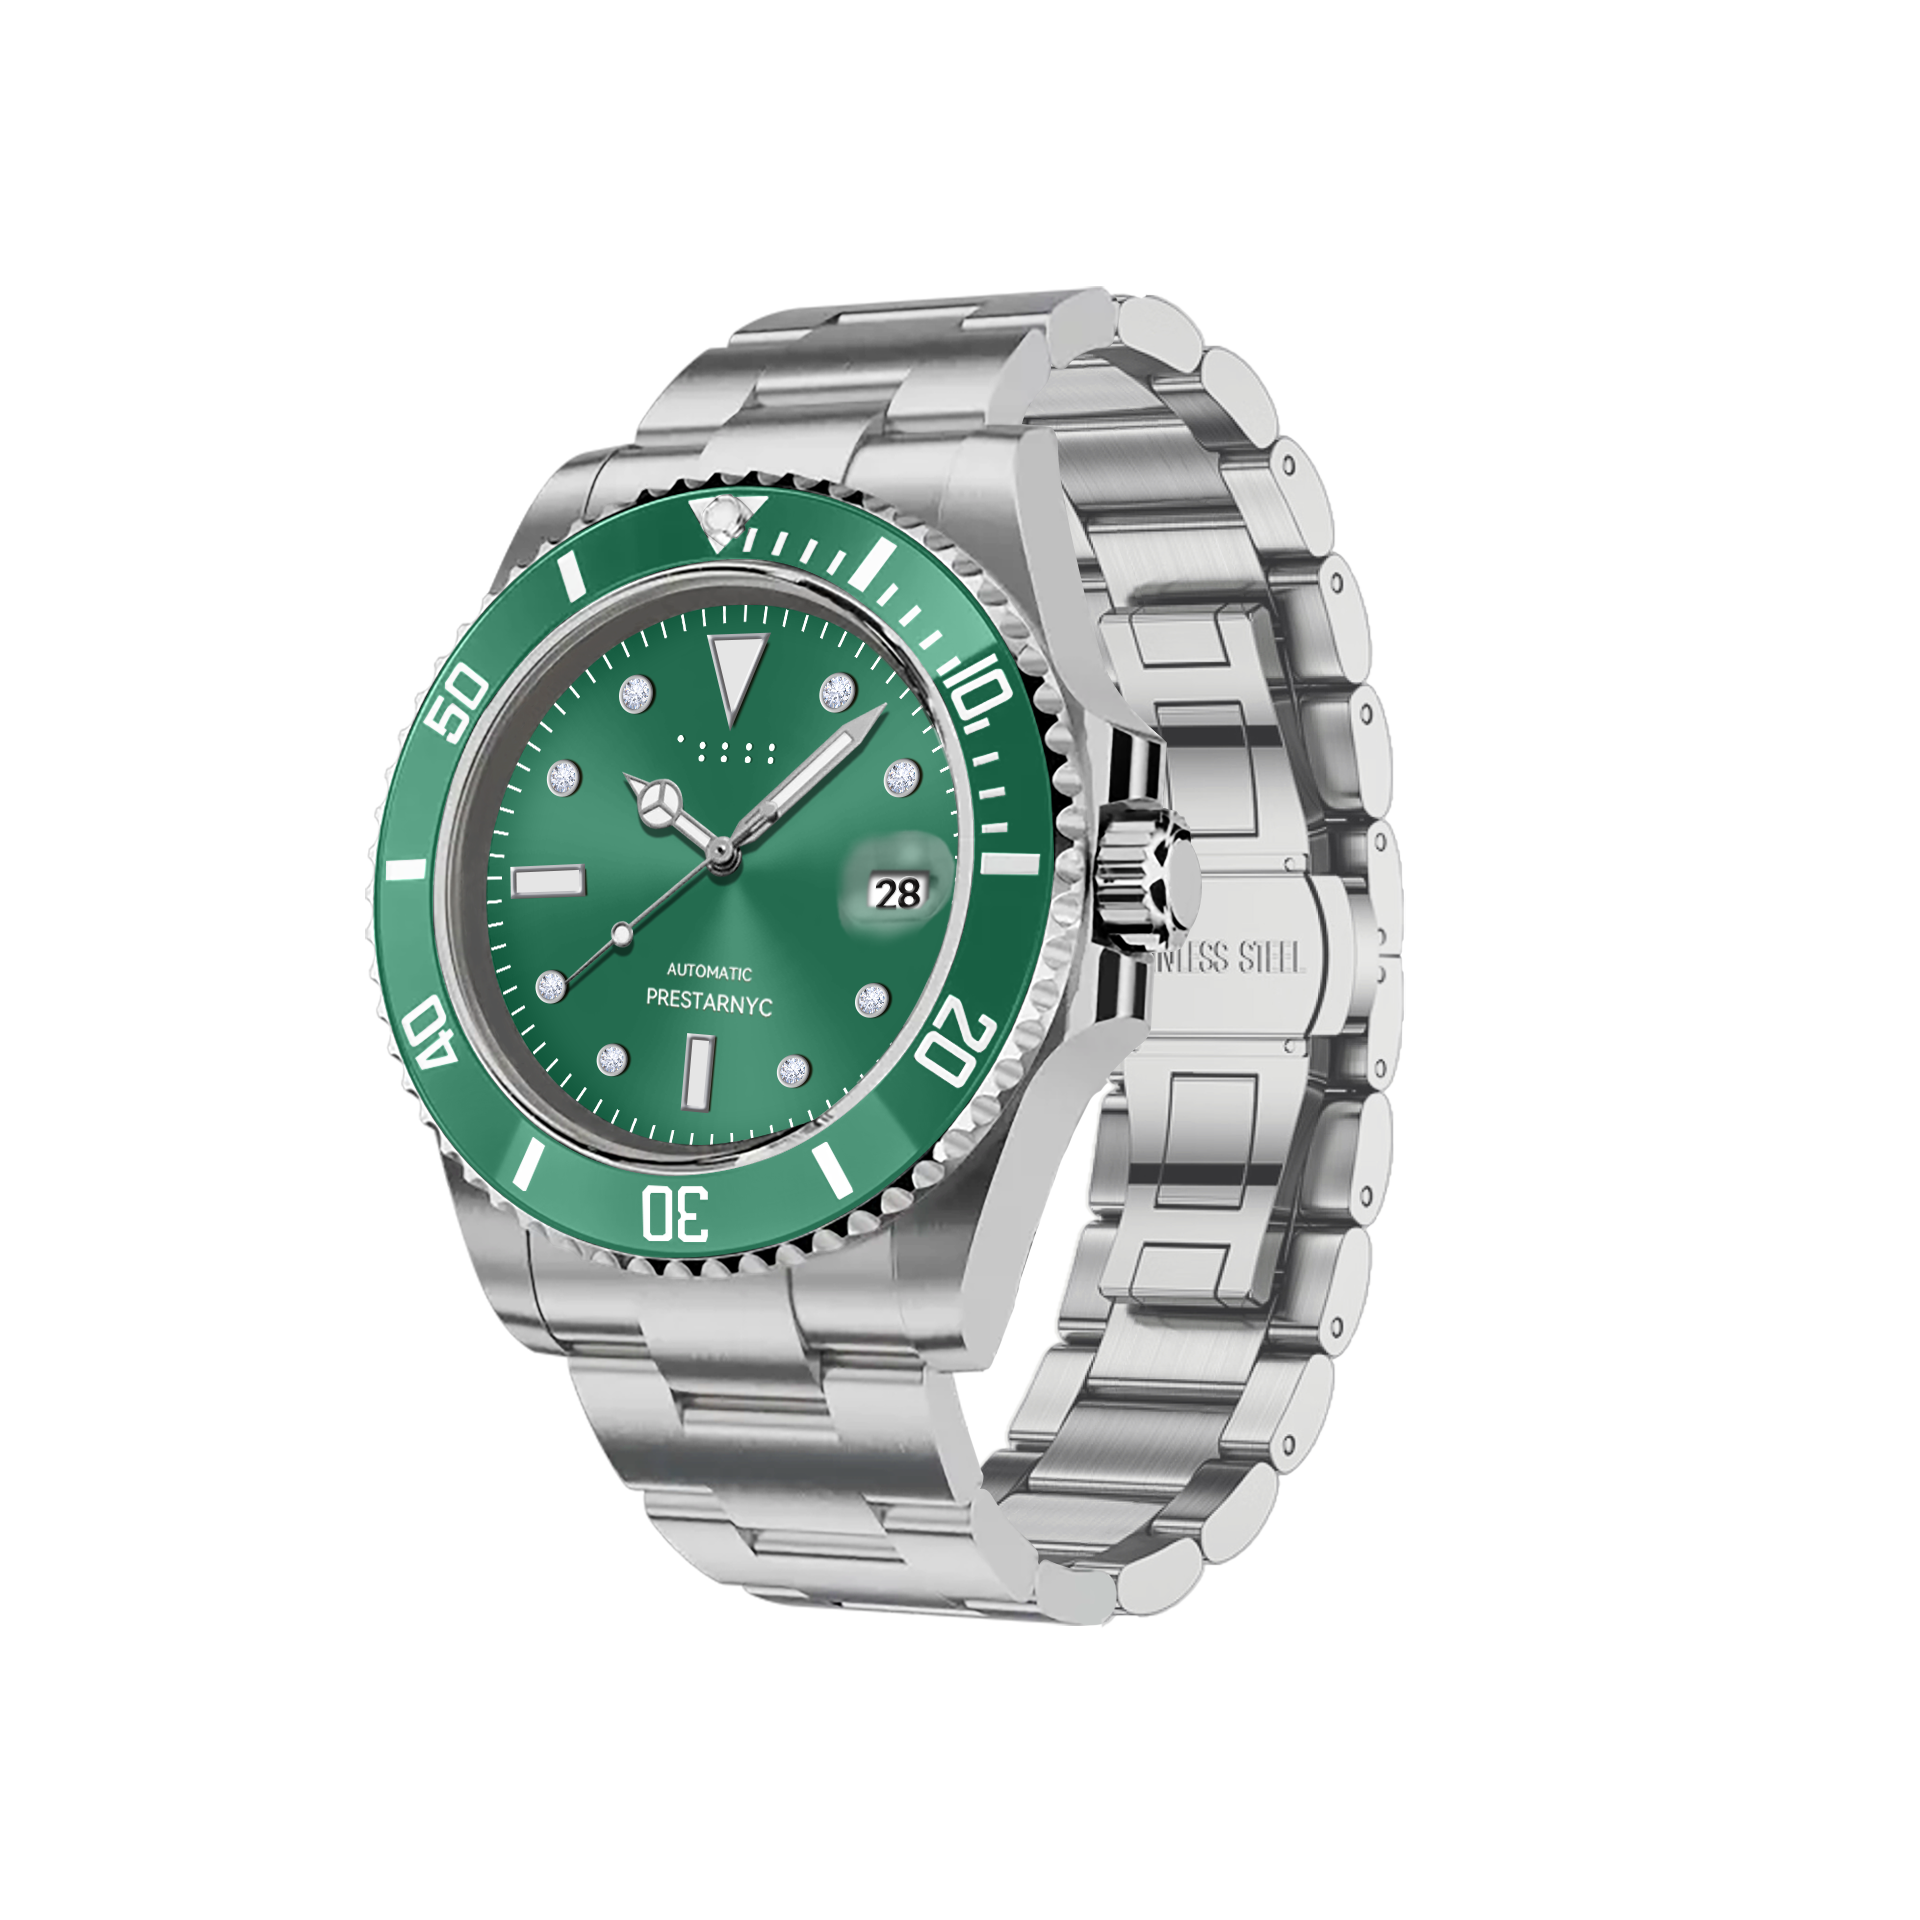 Prestar NYC Aquaman Classic Diamond Watch (Forest Green)